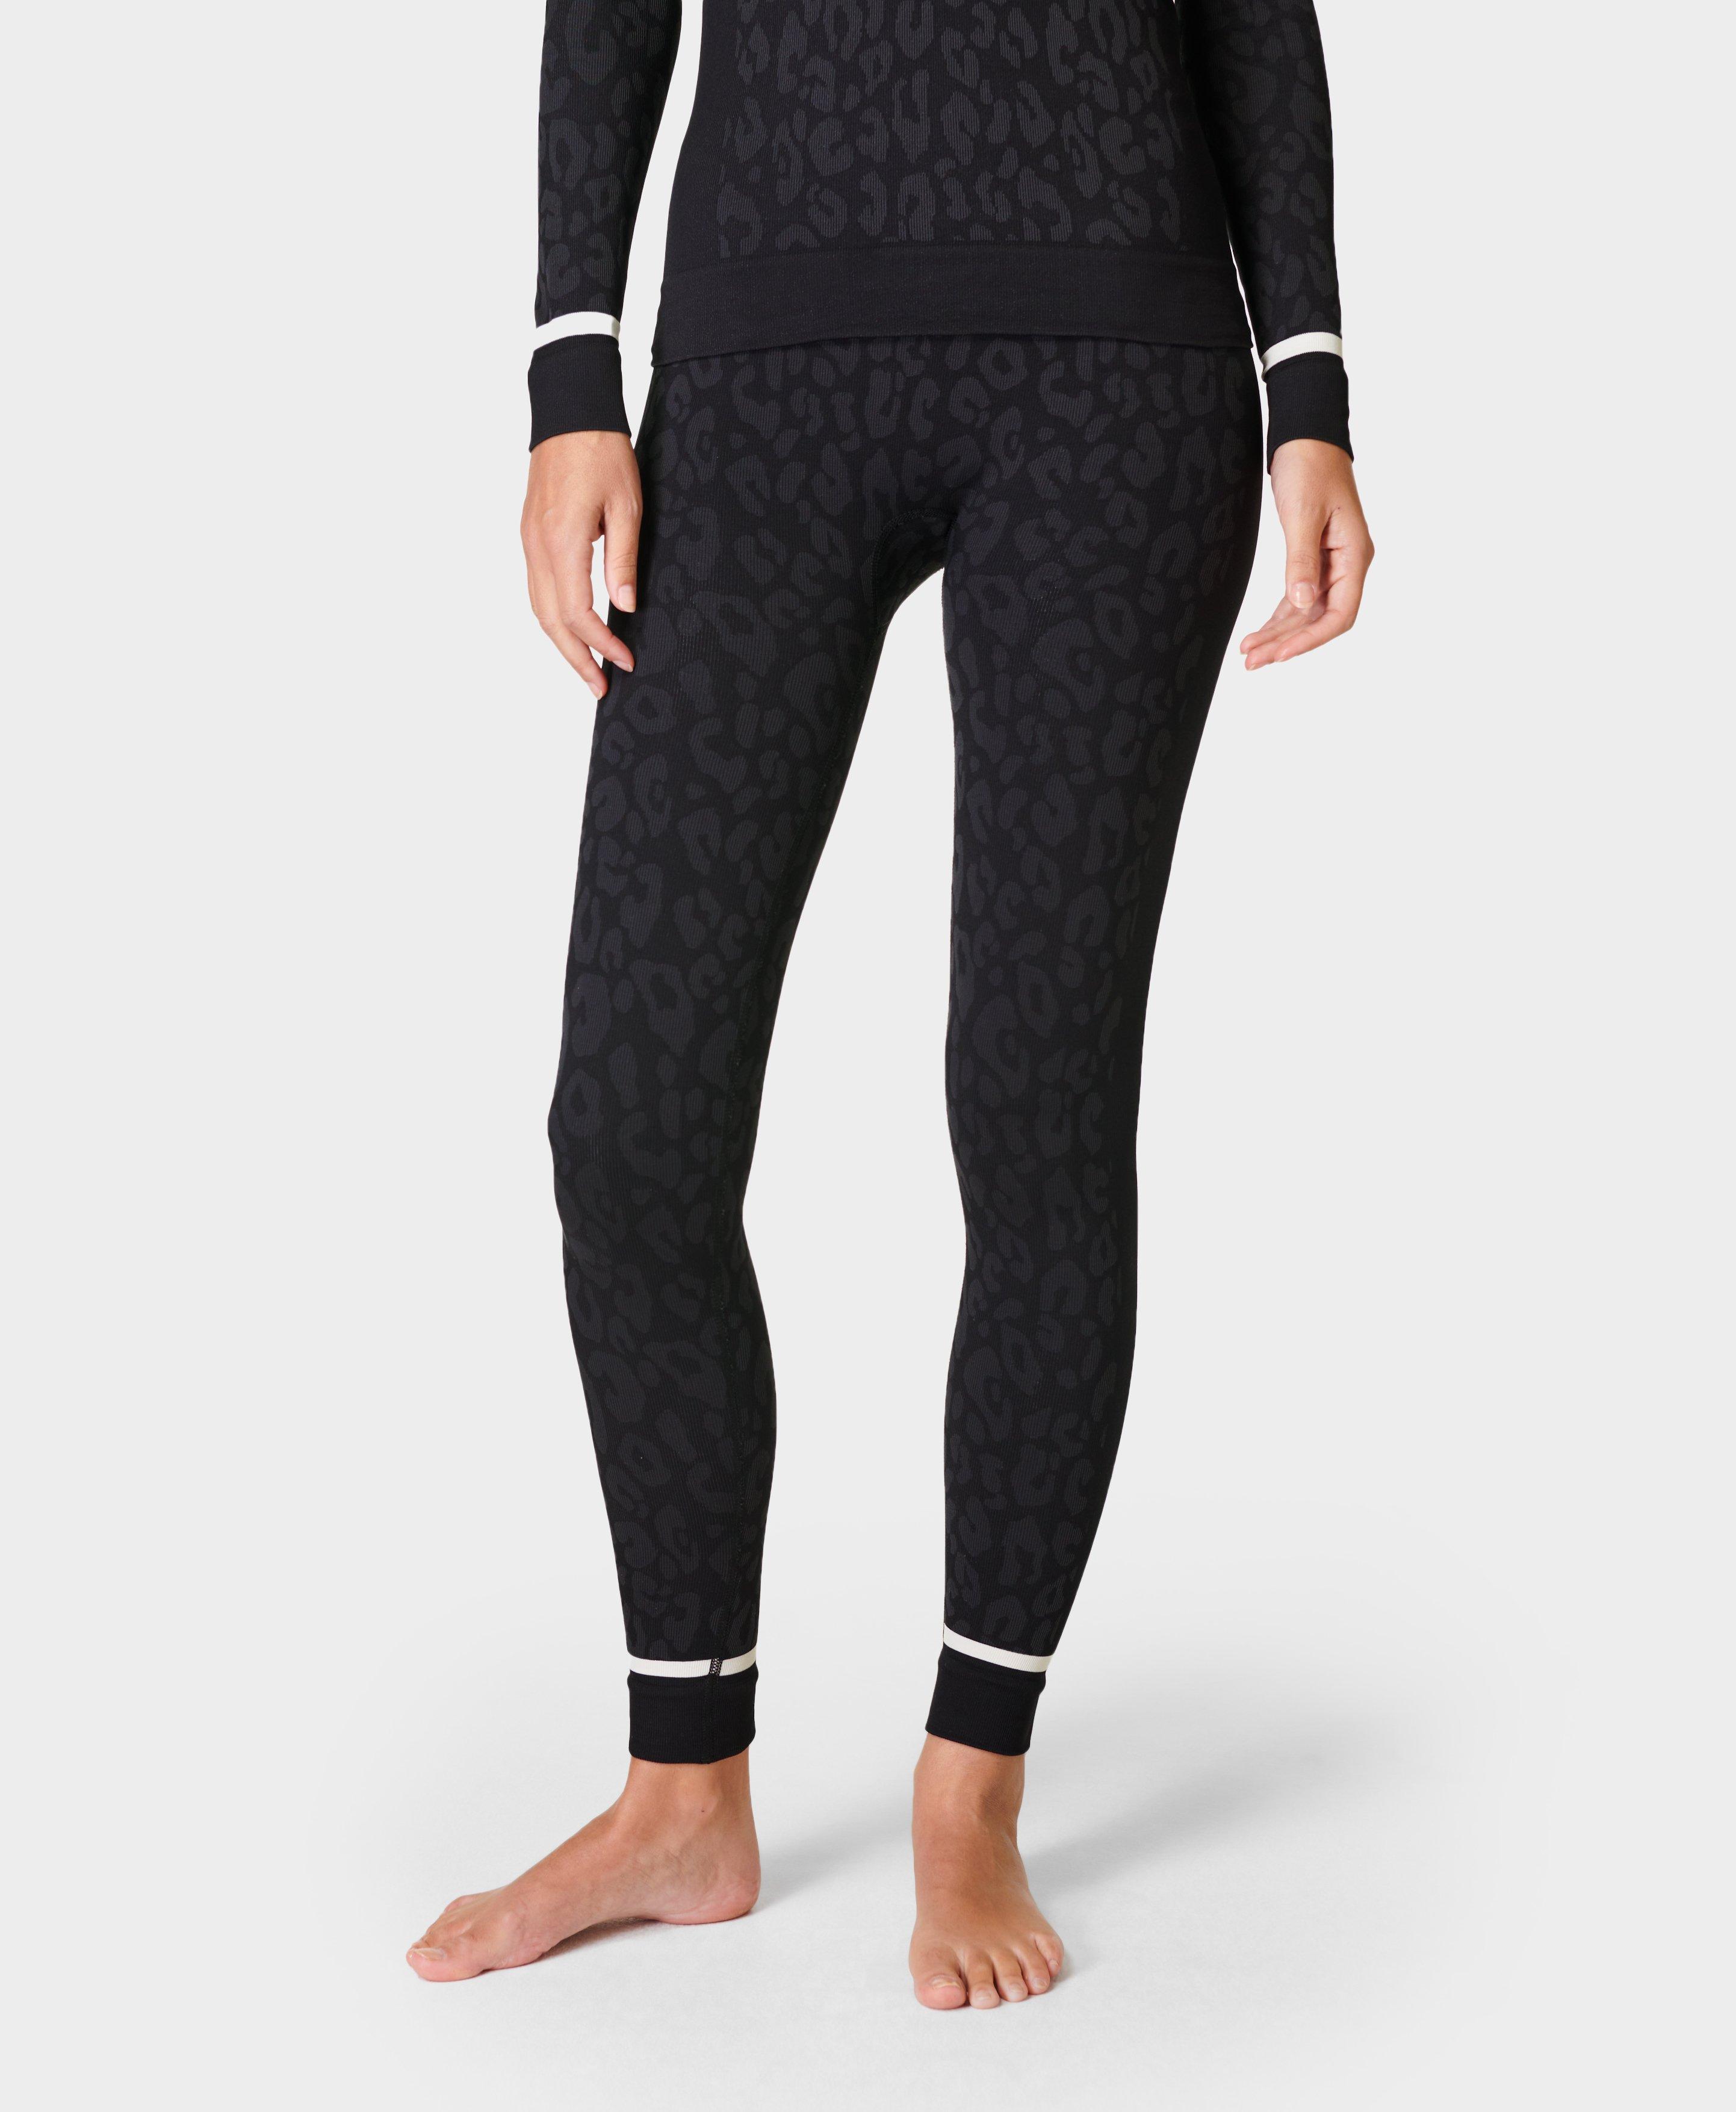 Flirtitude active leggings.  Heavy knit sweater, Black leggings women,  Cheetah print leggings